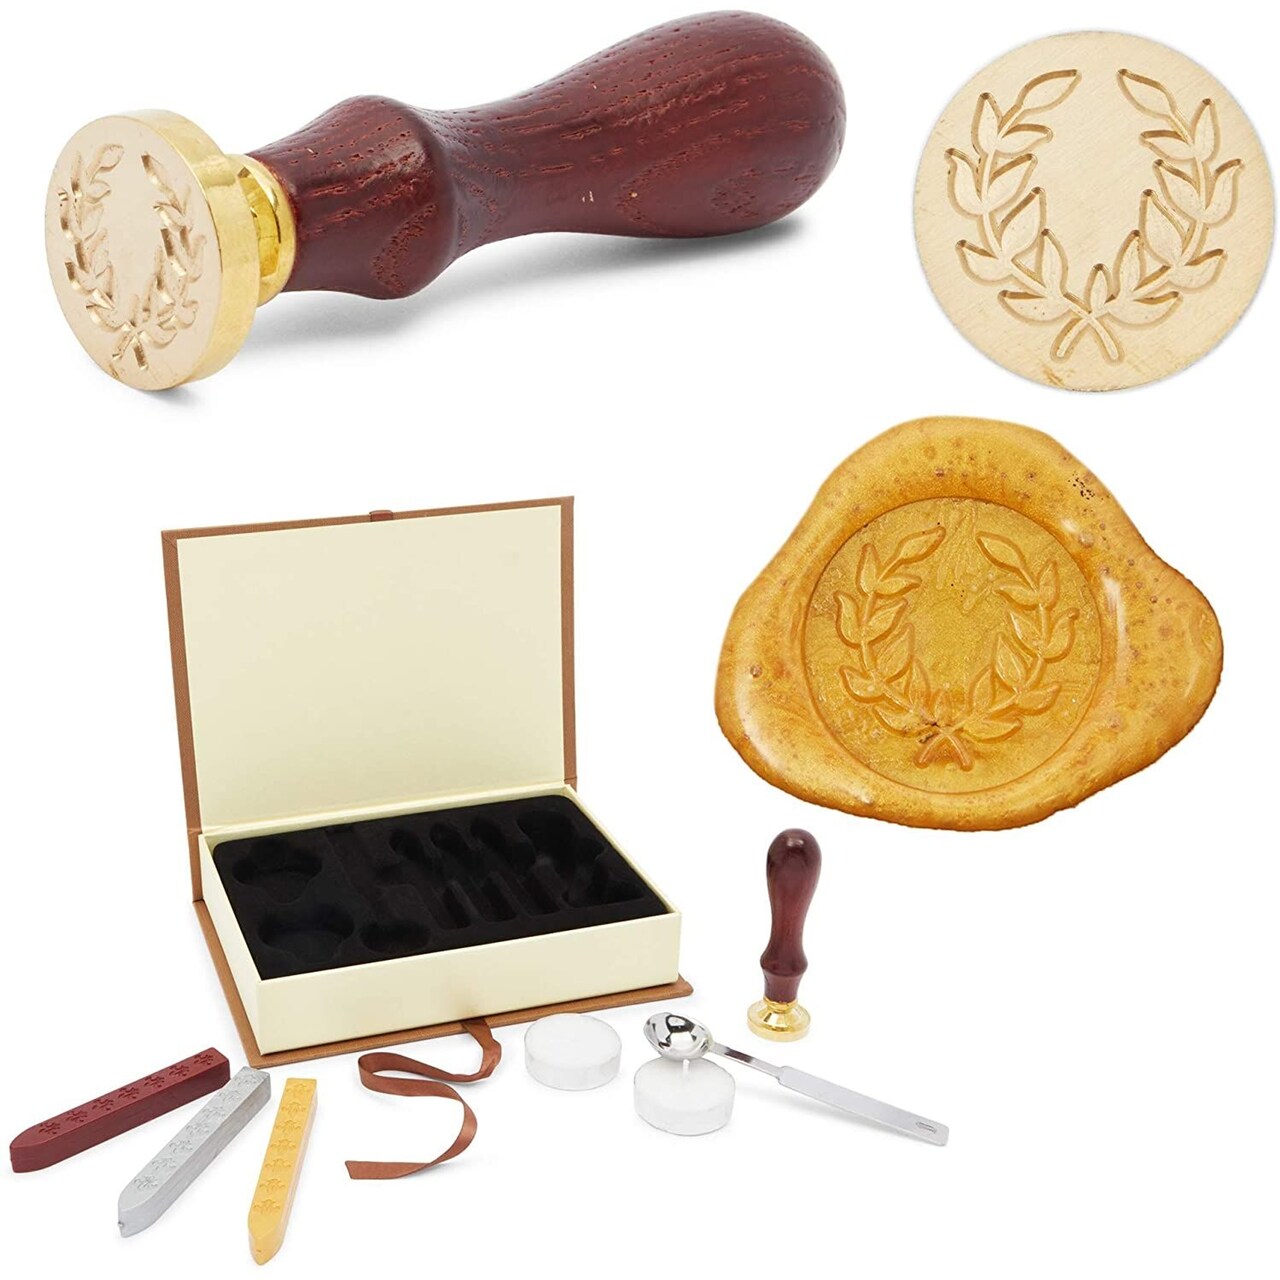 2 pcs Gold Sealing Wax sticks for Wax Seal Stamp